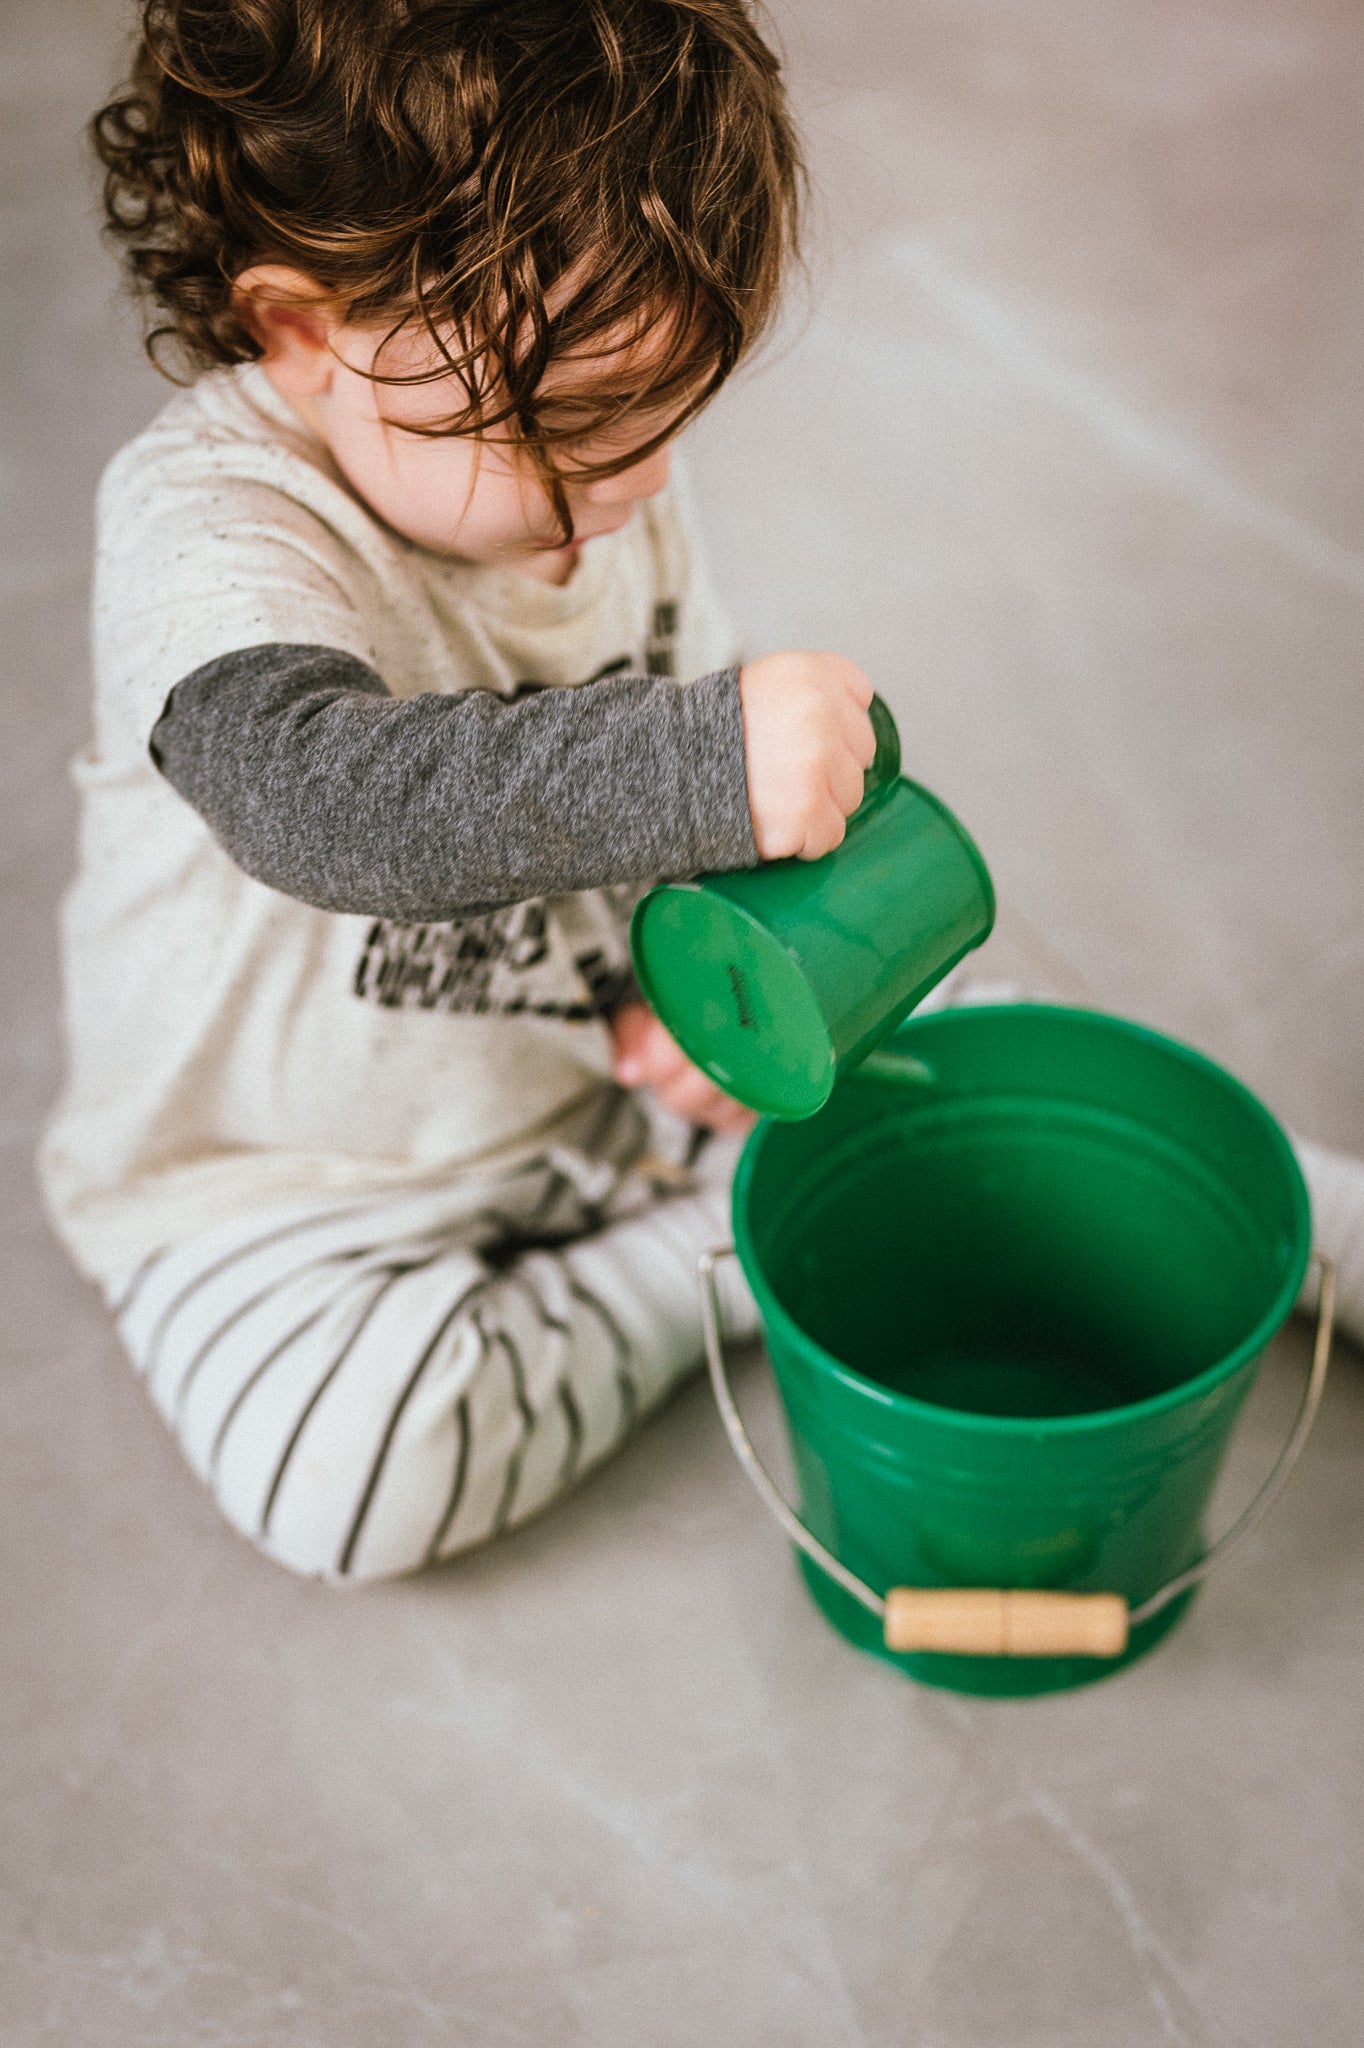 Toddler Watering Can: Green - משפך ירוק לילדים צעירים